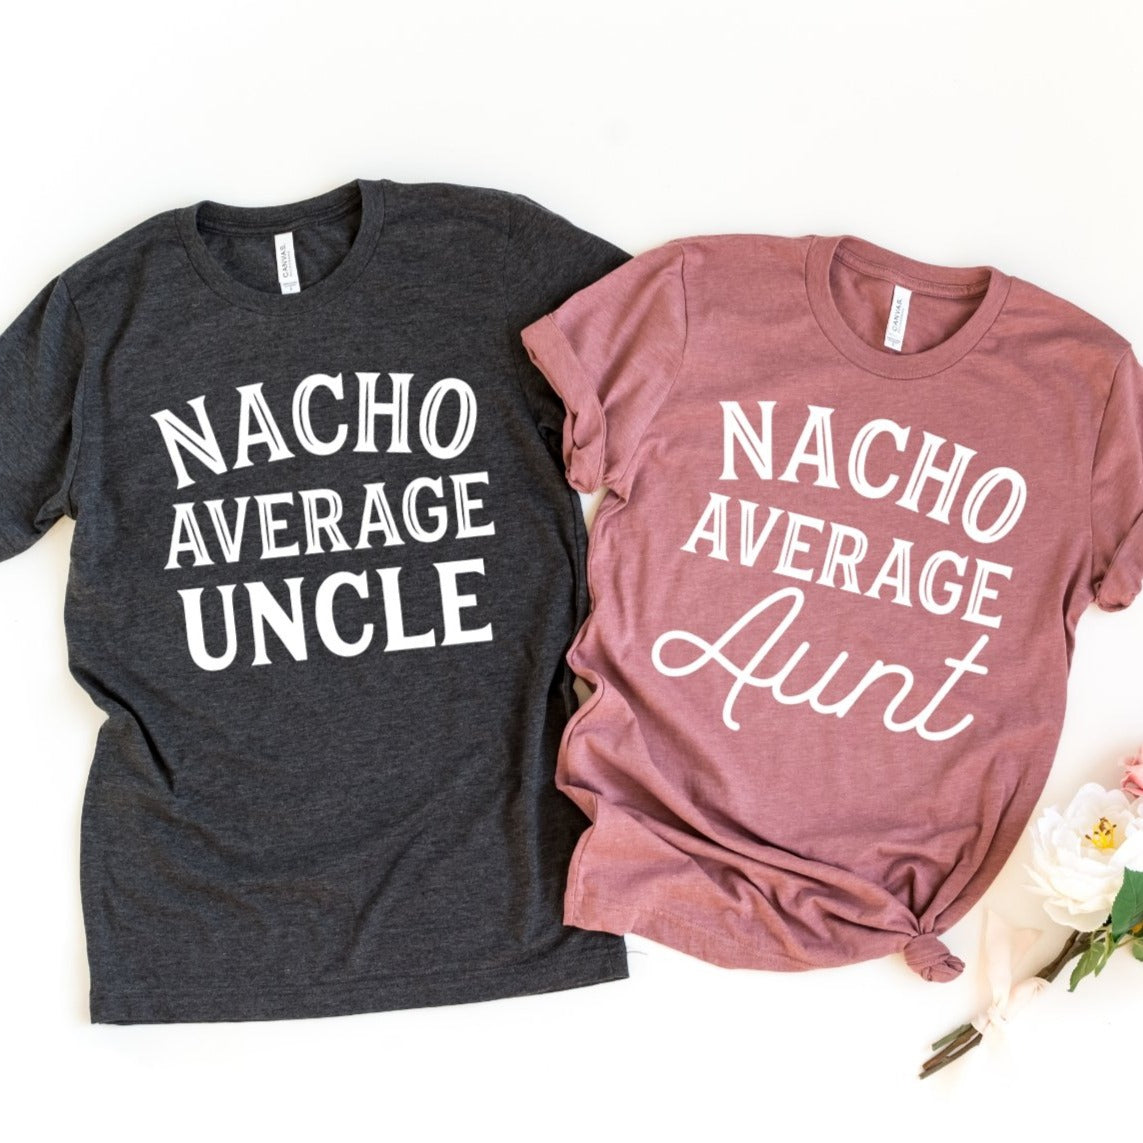 Nacho Average Aunt & Uncle (Sold Individually)